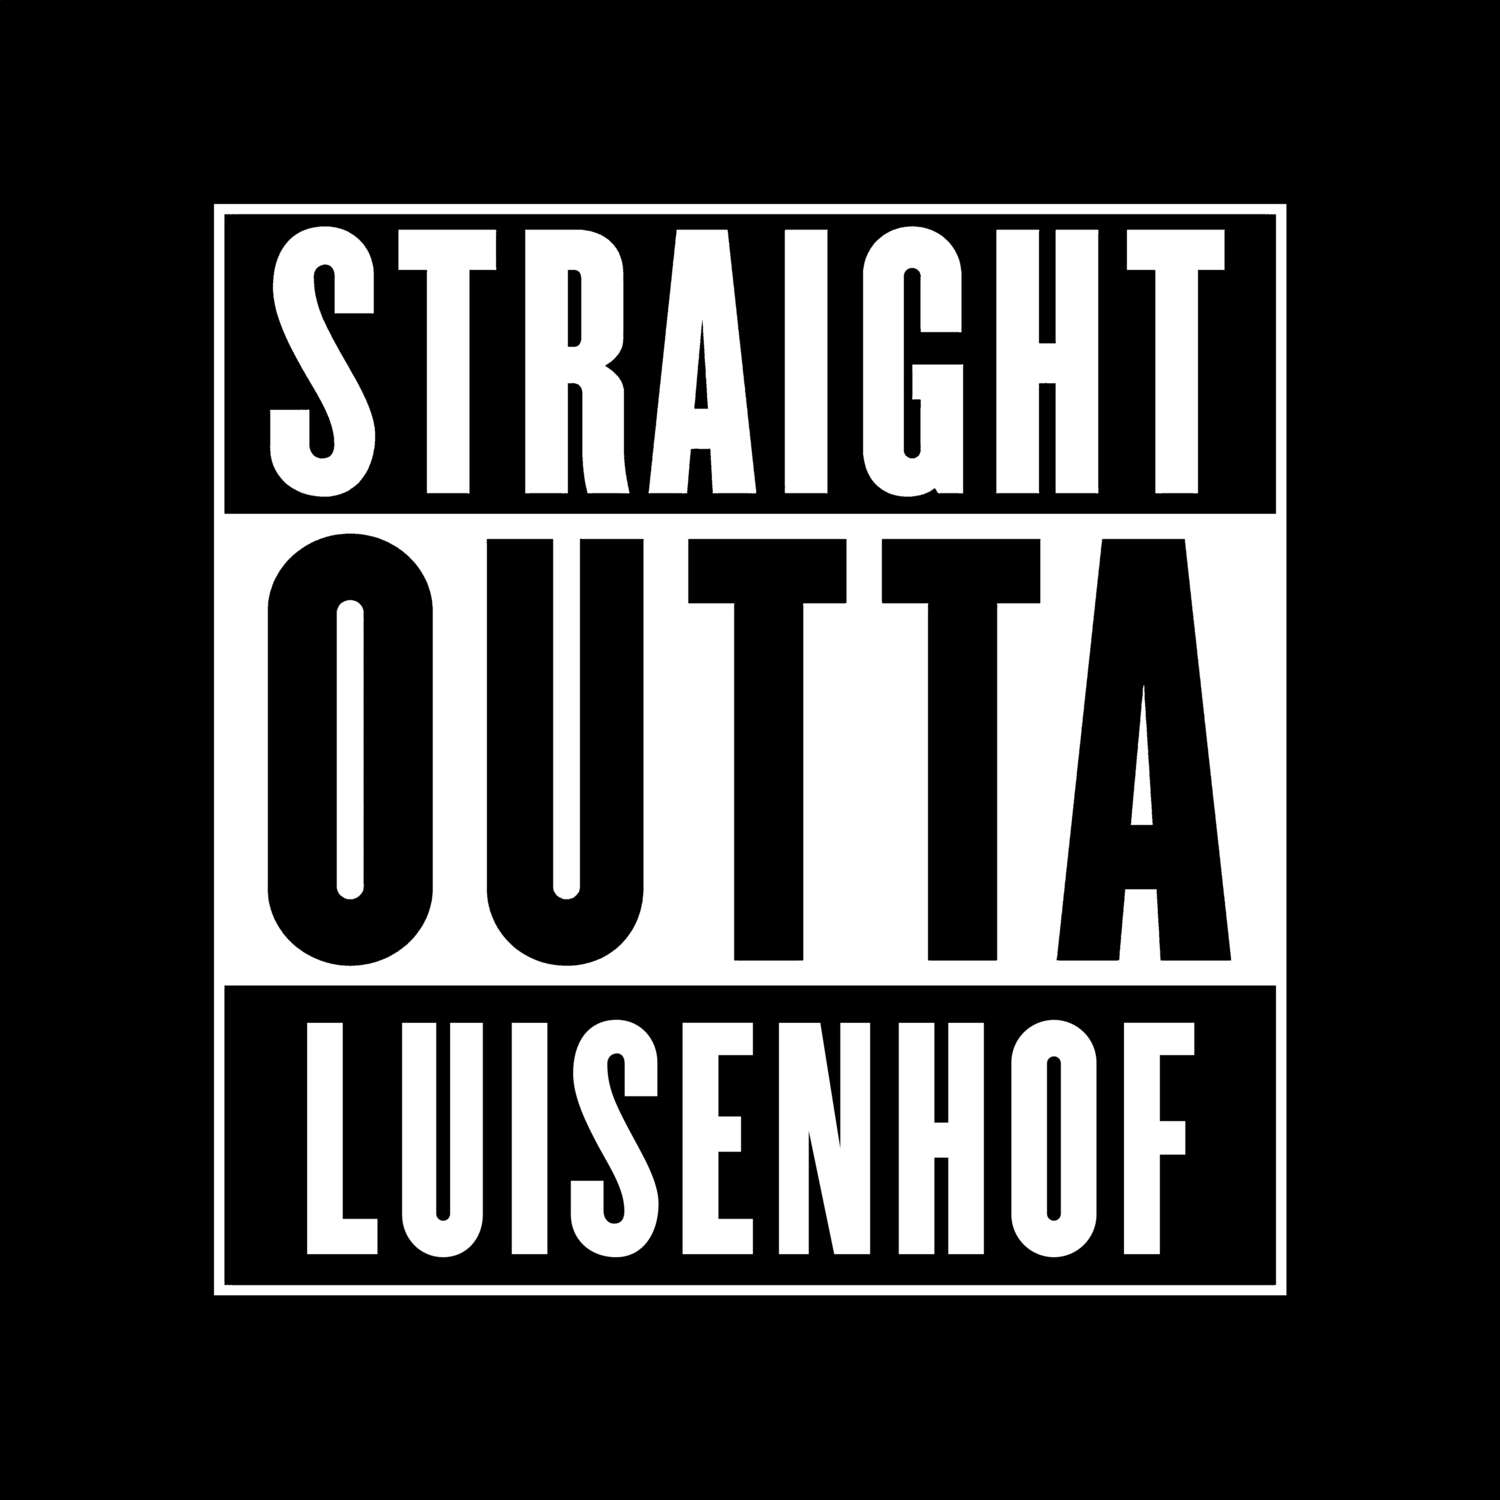 Luisenhof T-Shirt »Straight Outta«